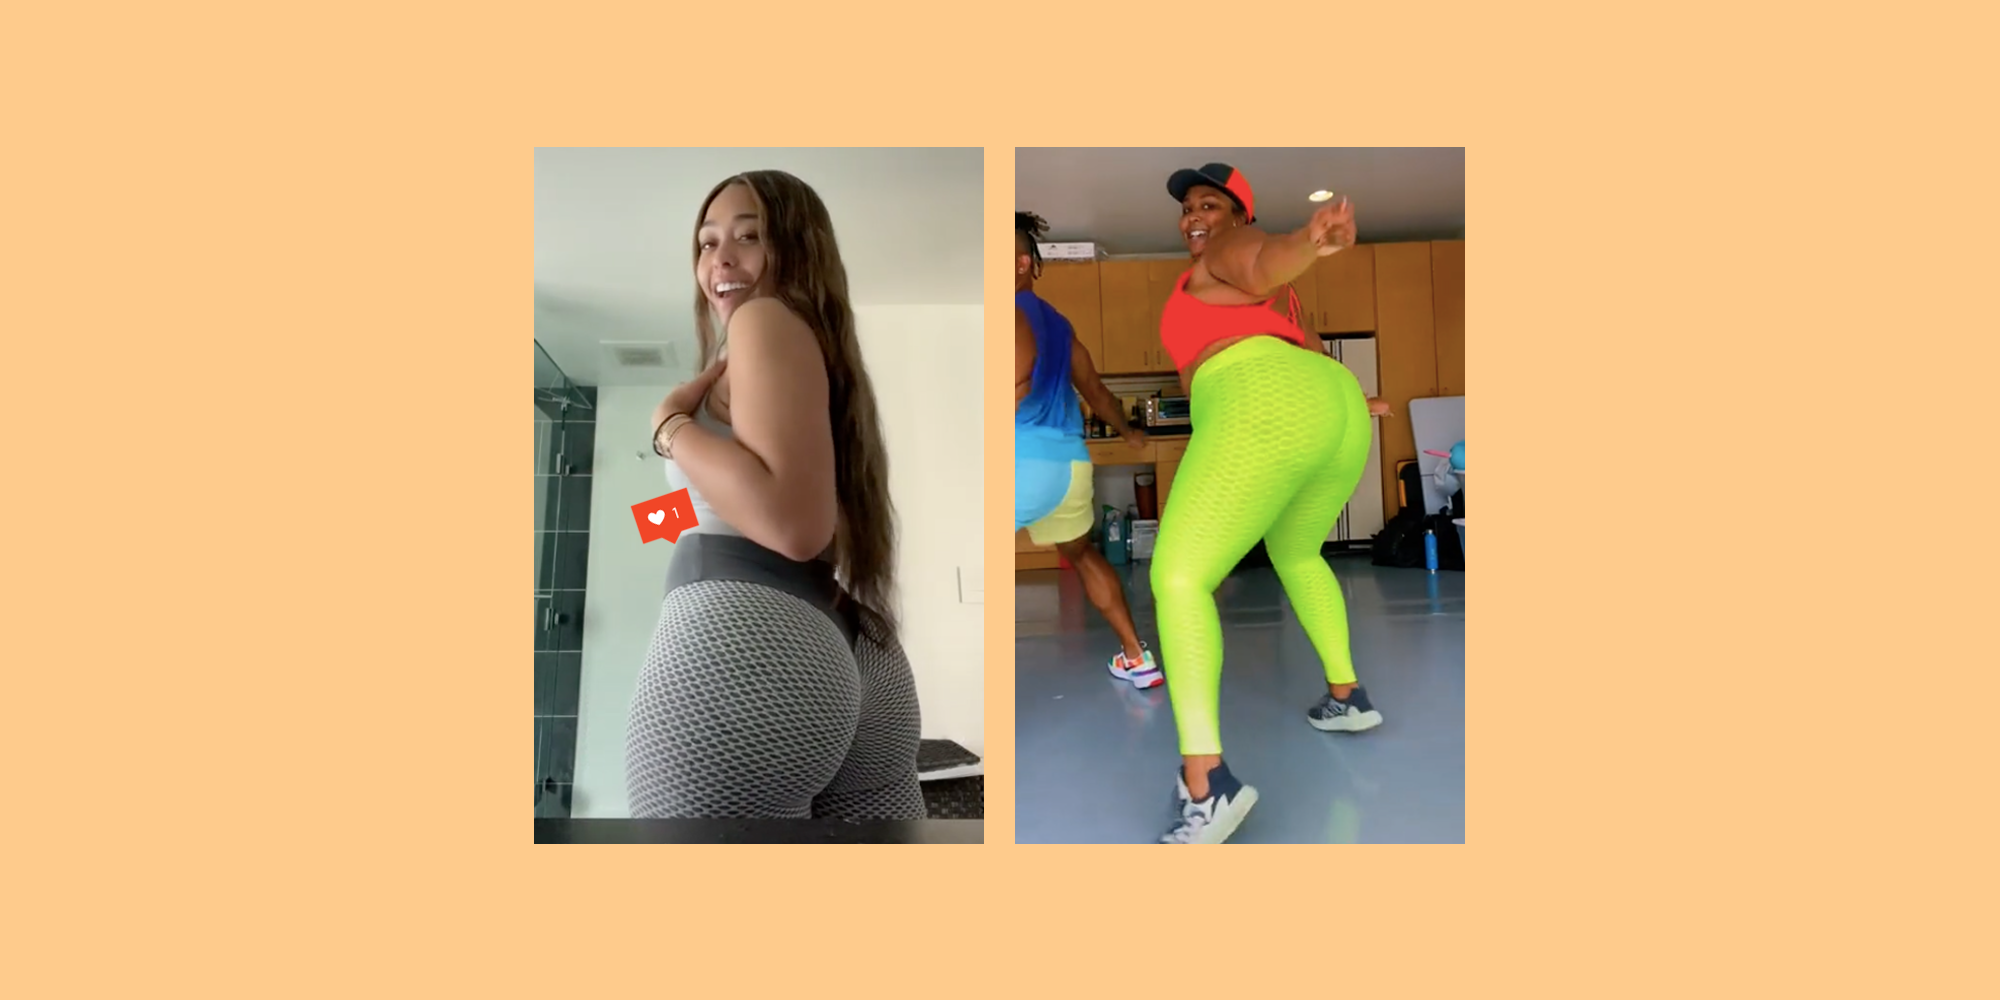 2021 Female Yoga Outfits Seamless High Waist Leggings Push Up Leggins  Sports Women Fitness Running Energy Elastic Trousers Gym Girl Tights Good  094